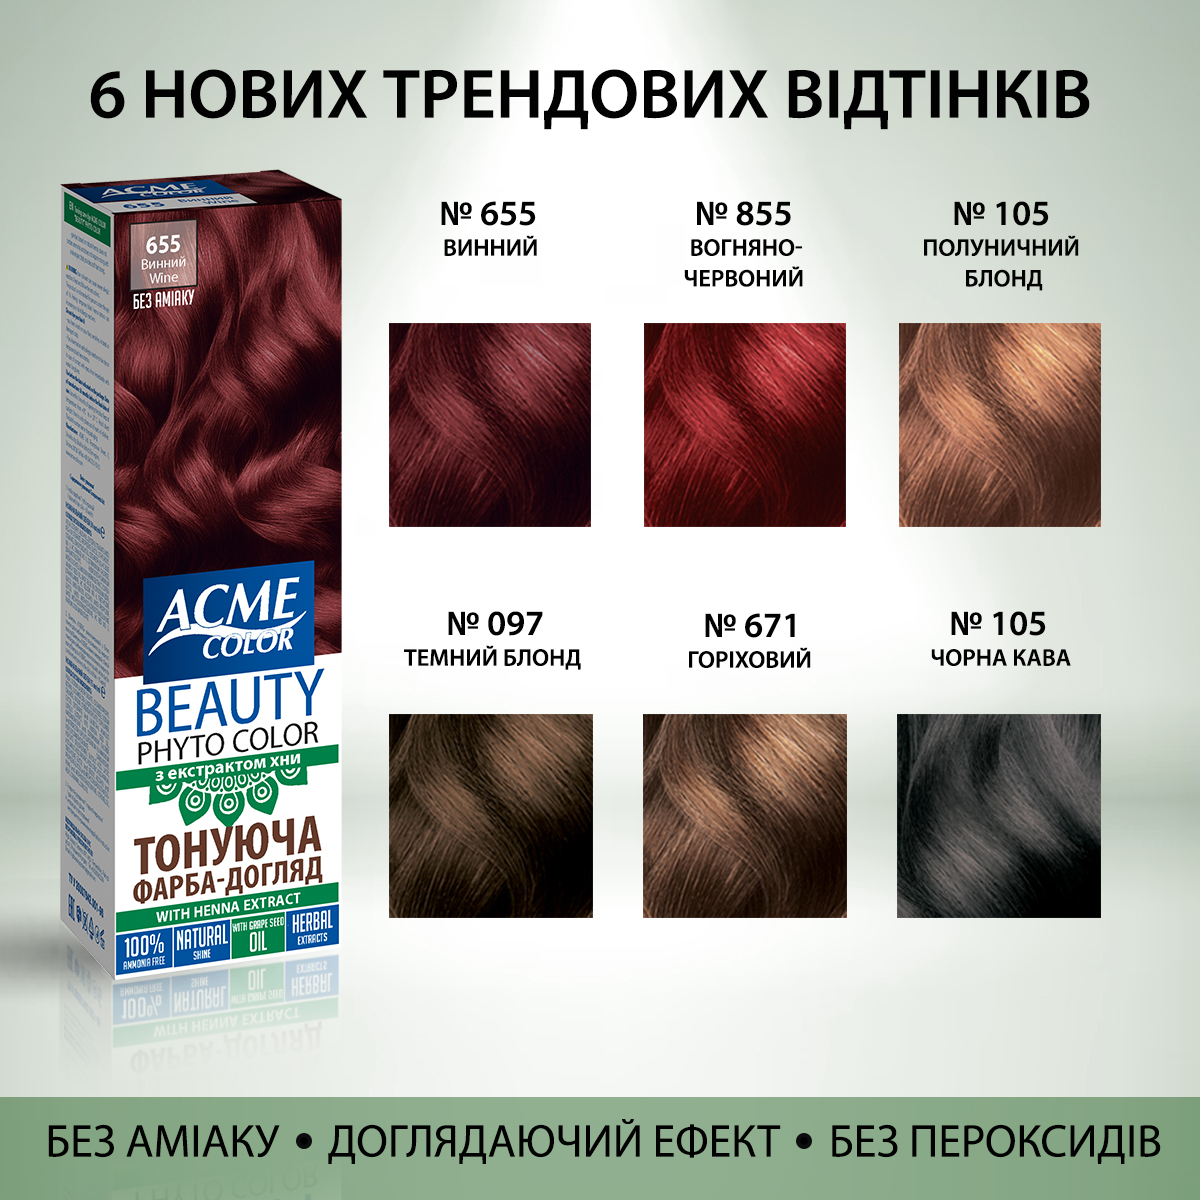 Гель-фарба Acme Color Beauty Phyto Color, відтінок 040, чорна кава, 60 мл - фото 5